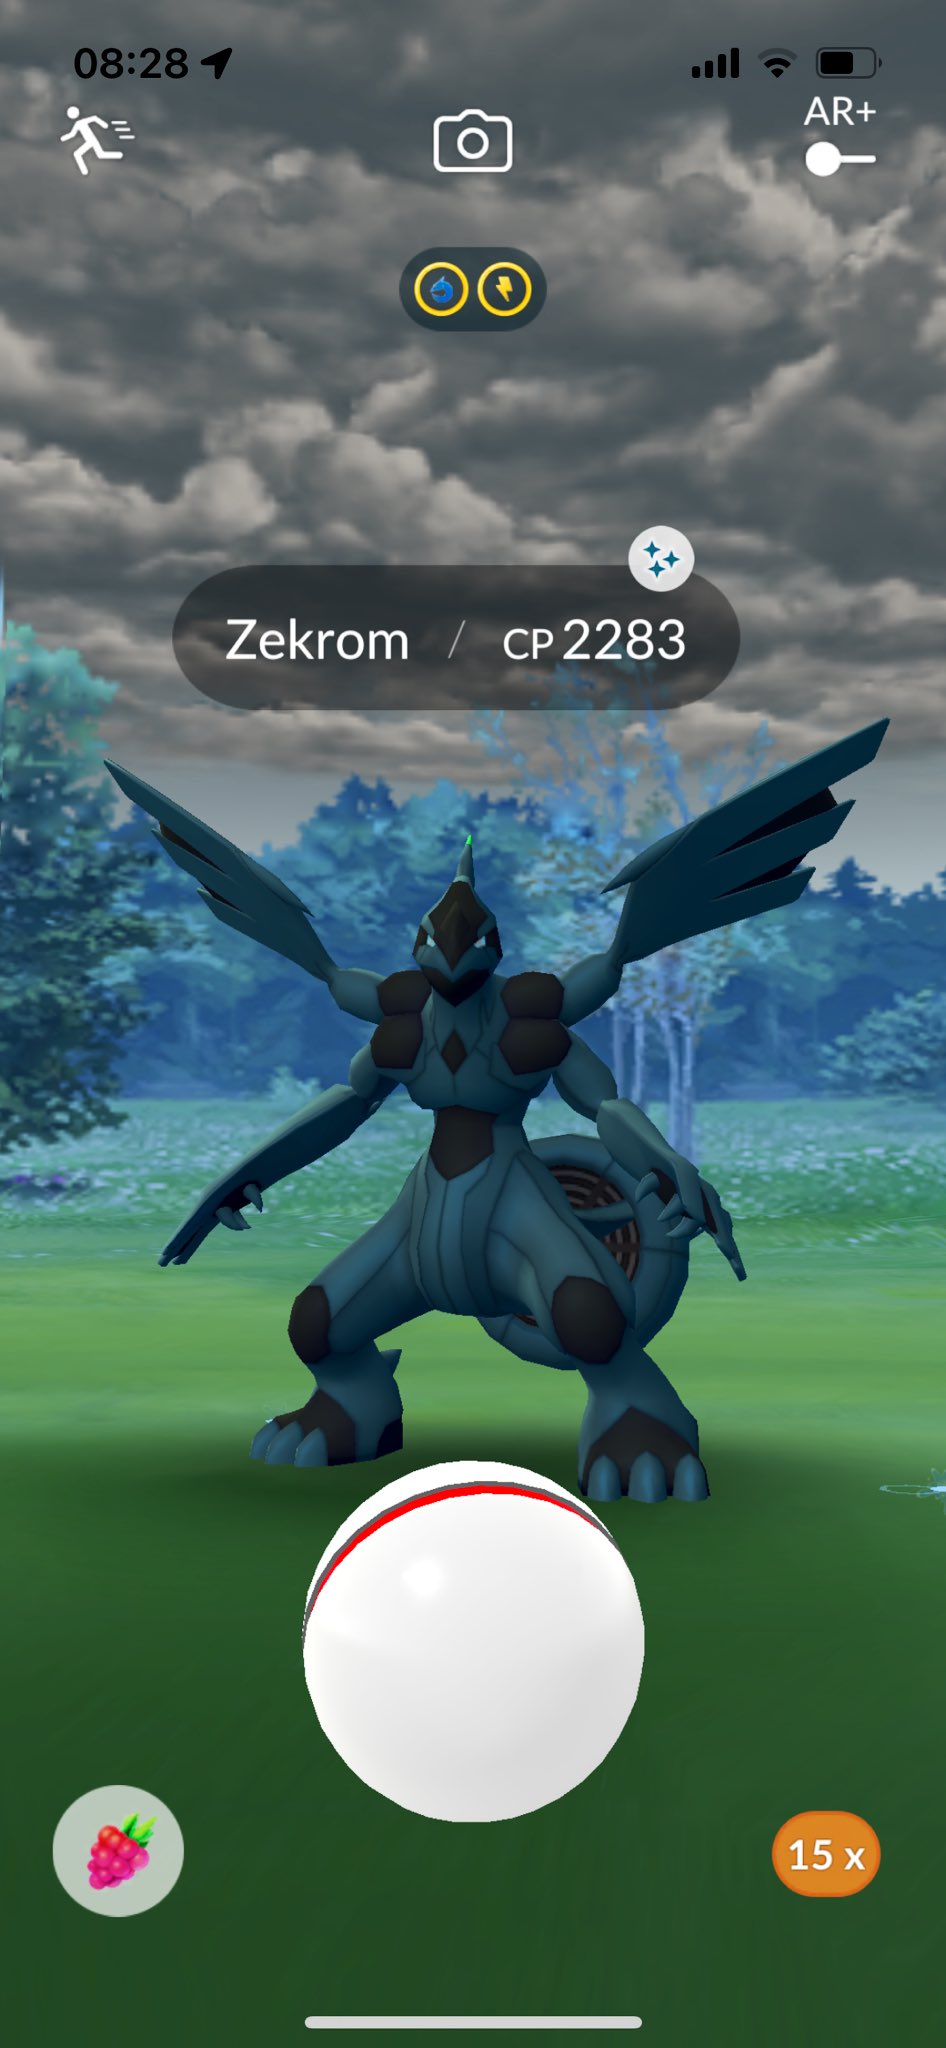 How to get a shiny Zekrom in Pokemon Go 